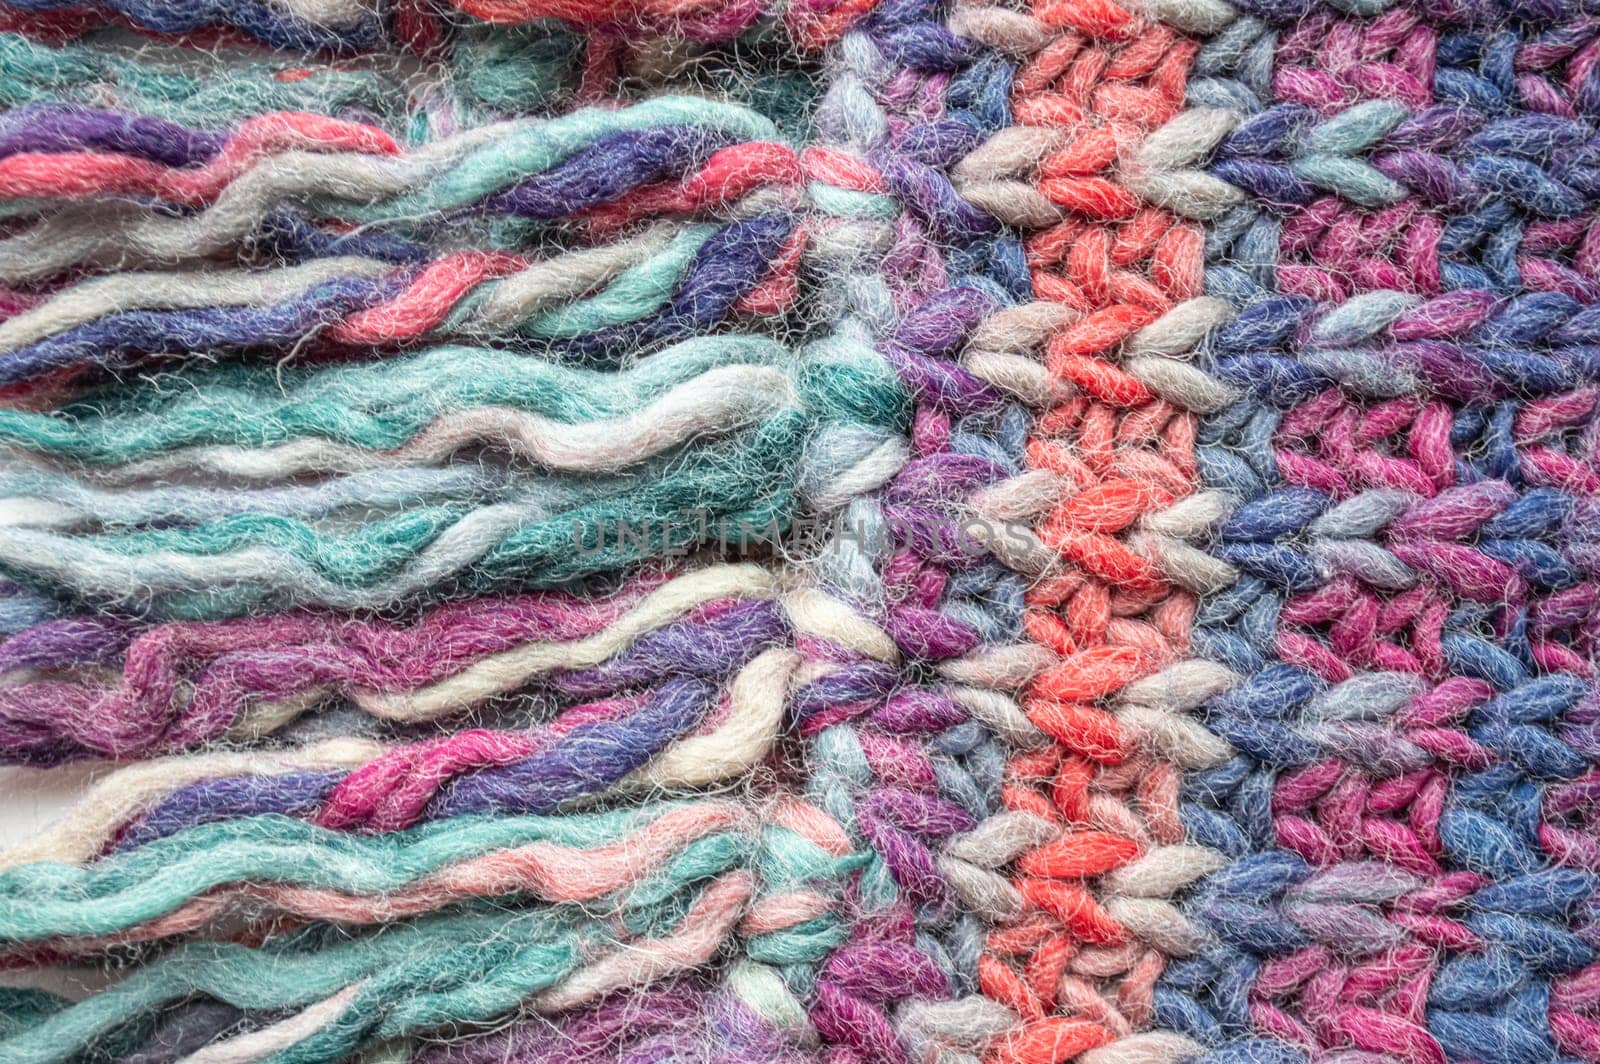 Fiber Knitted Background. Vintage Woven Design. Handmade Christmas Fabric. Macro Knitted Texture. Cotton Thread. Scandinavian Warm Decor. Structure Cloth Garment. Knitting Texture.